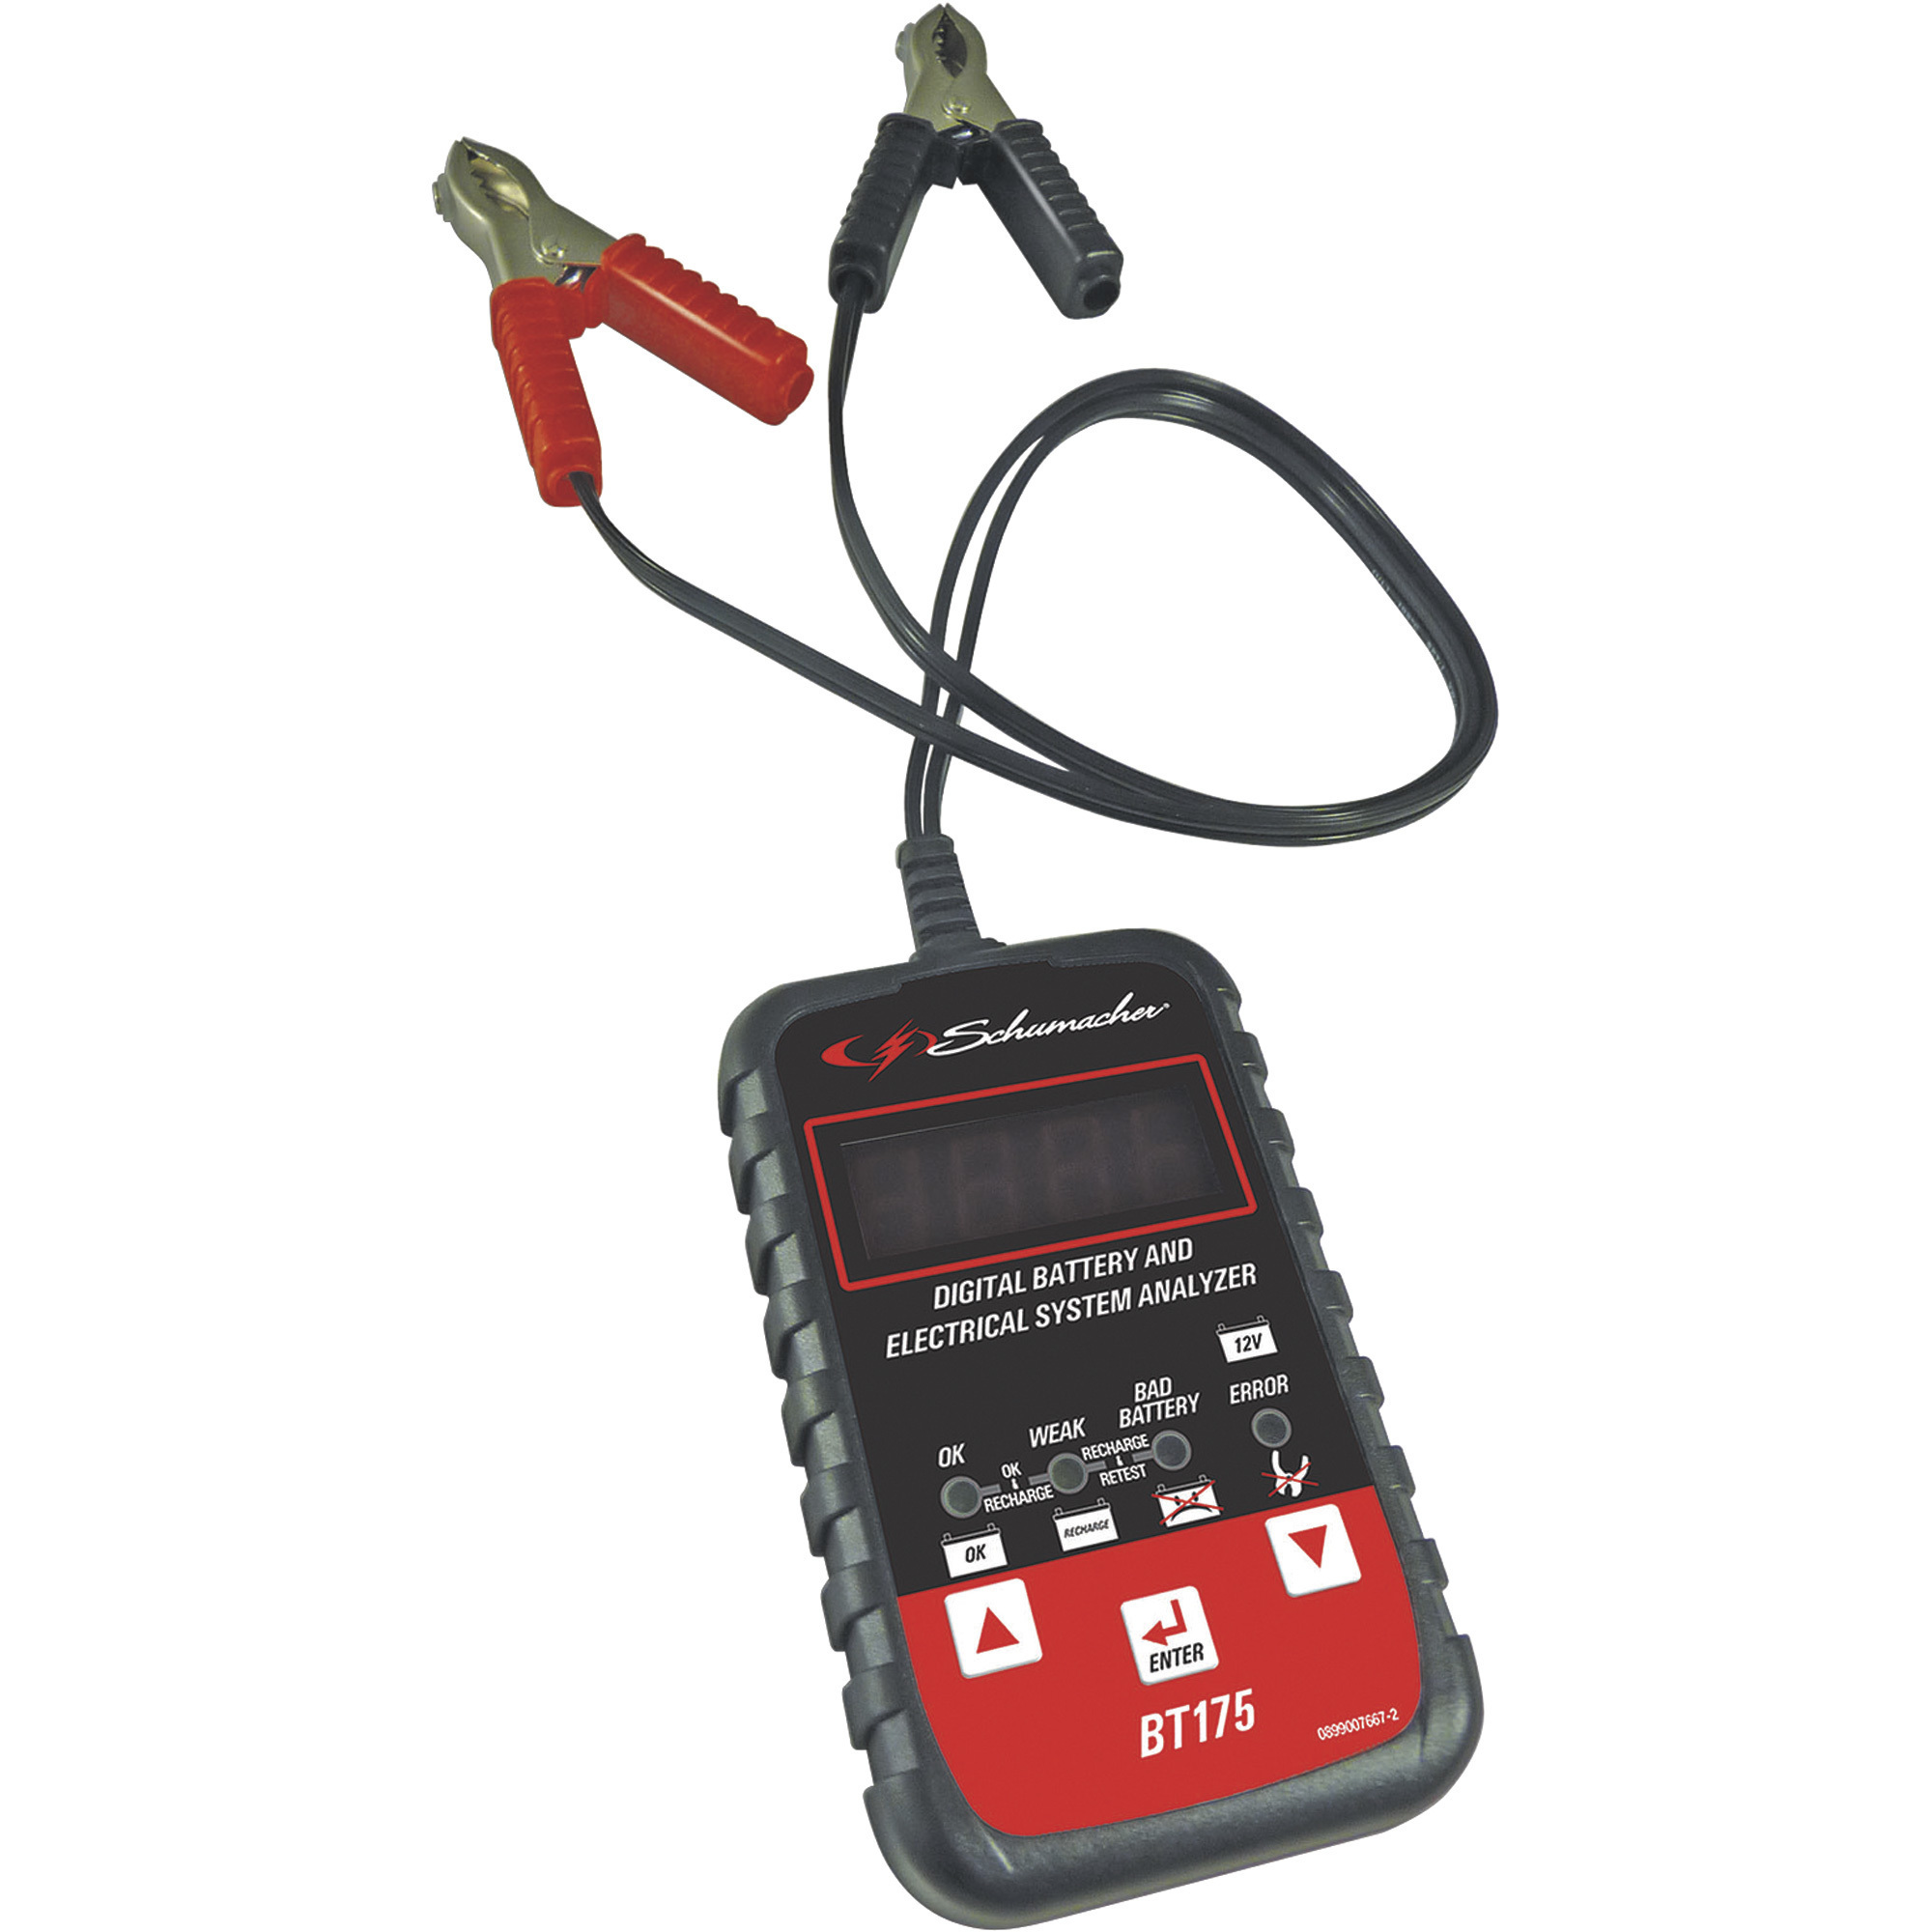 Schumacher Digital Battery Tester and Electrical System Analyzer â For 12 Volt Batteries, Model BT-175